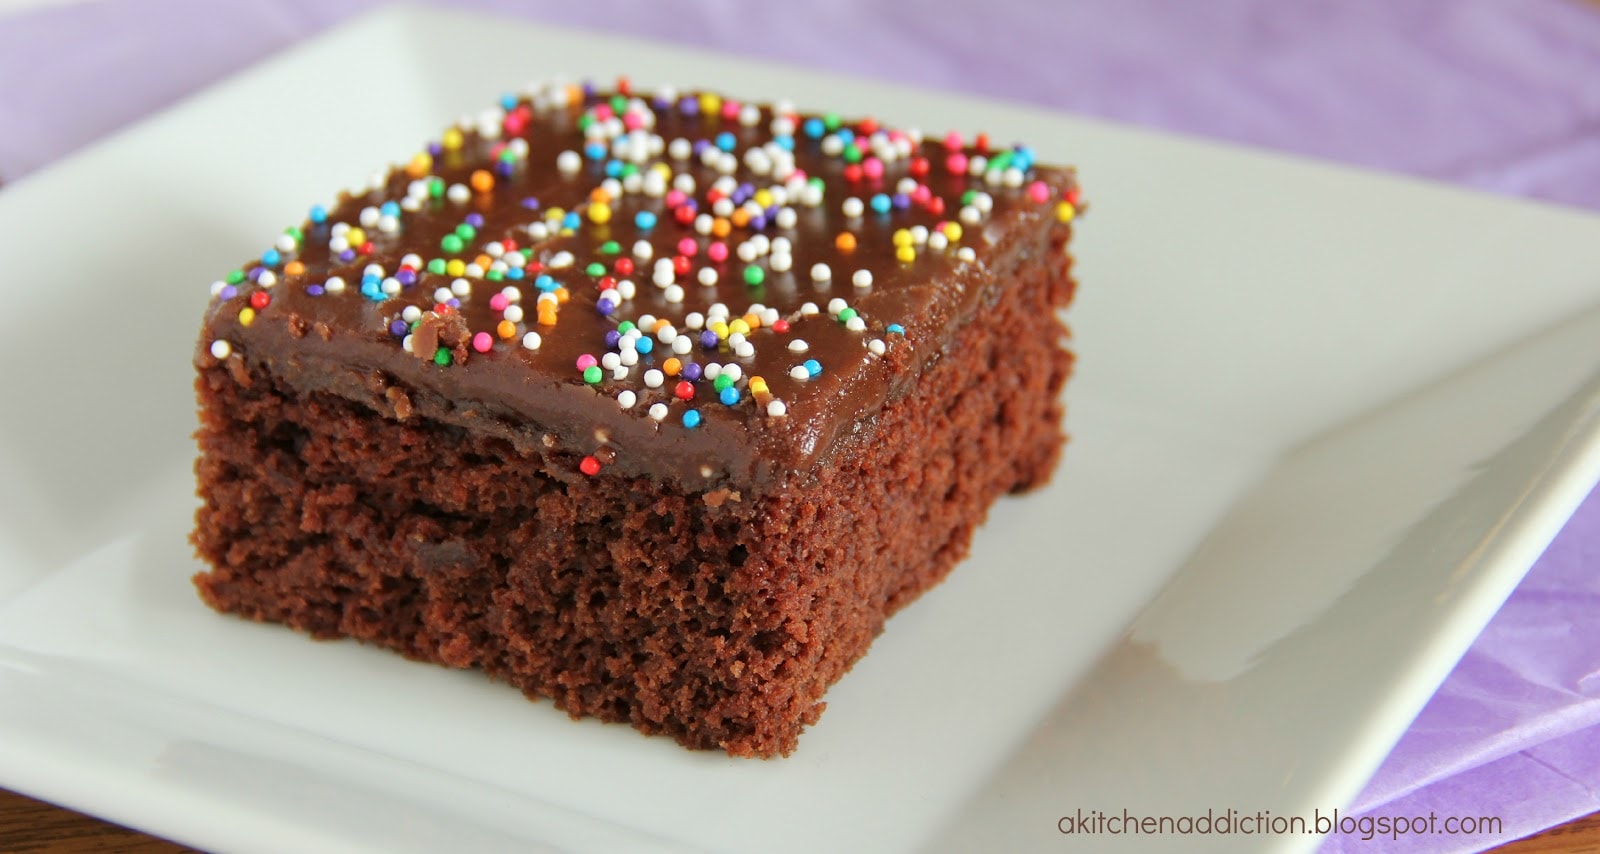 Chocolate depression cake(&VIDEO) - delicious crazy cake recipe